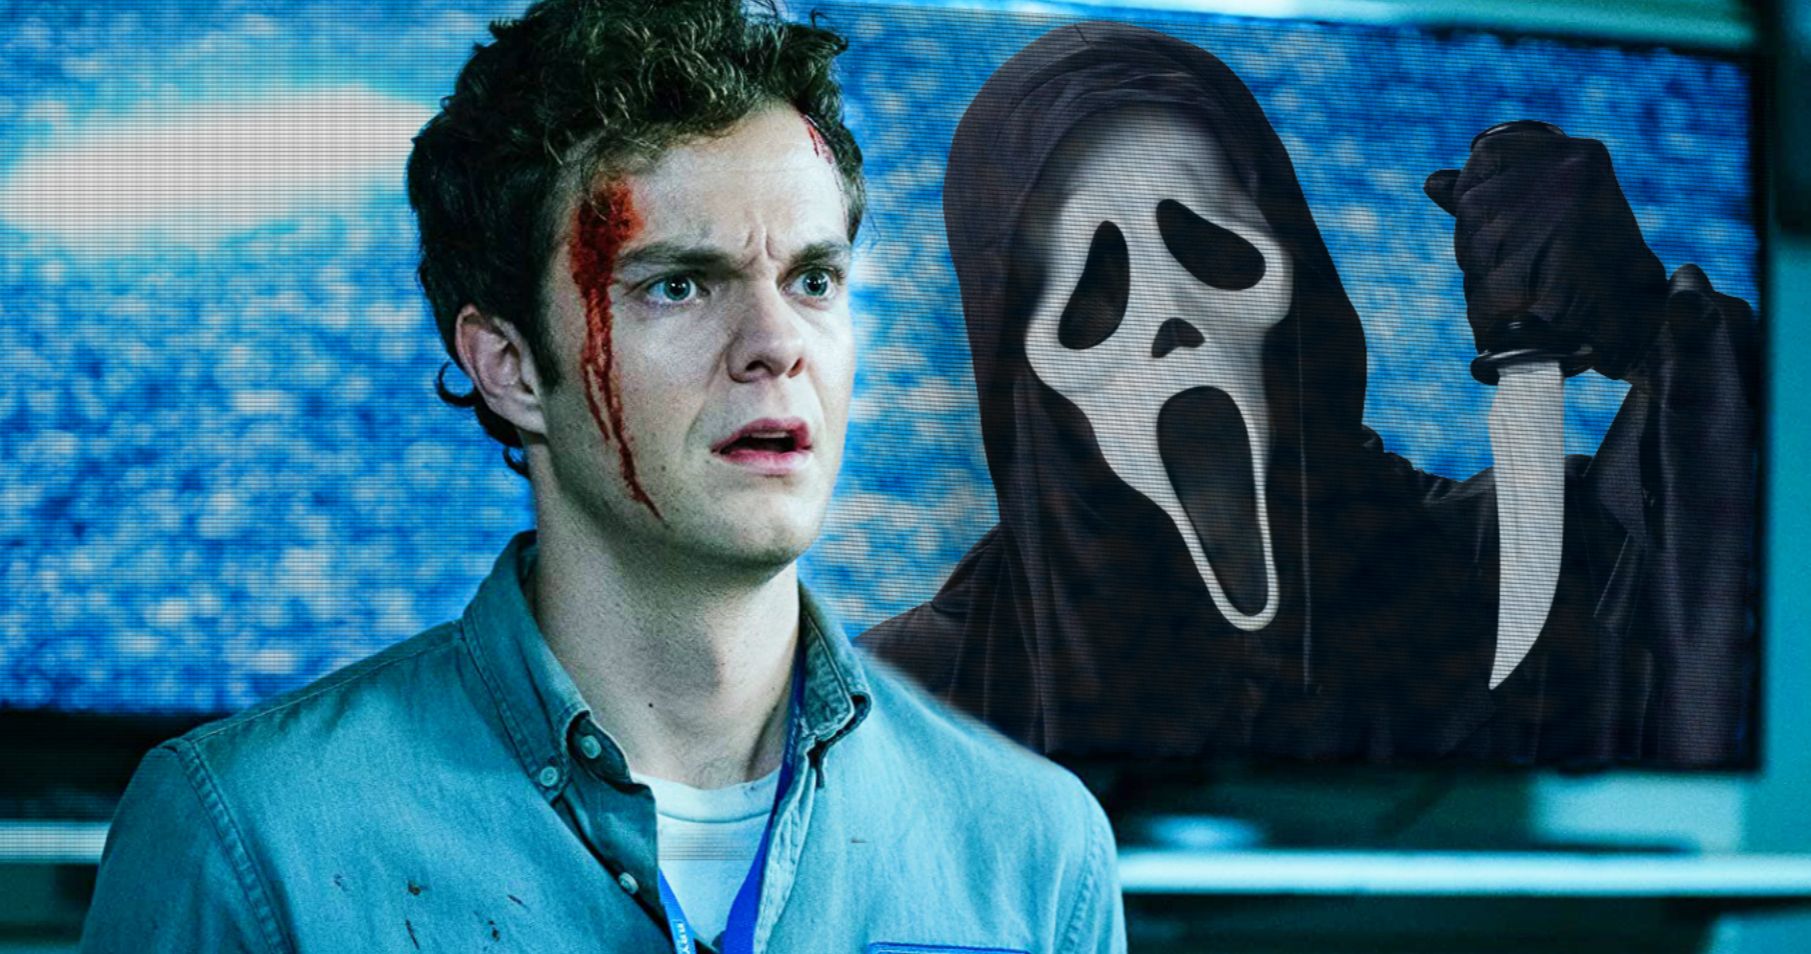 Scream 5 Brings in The Boys Star Jack Quaid